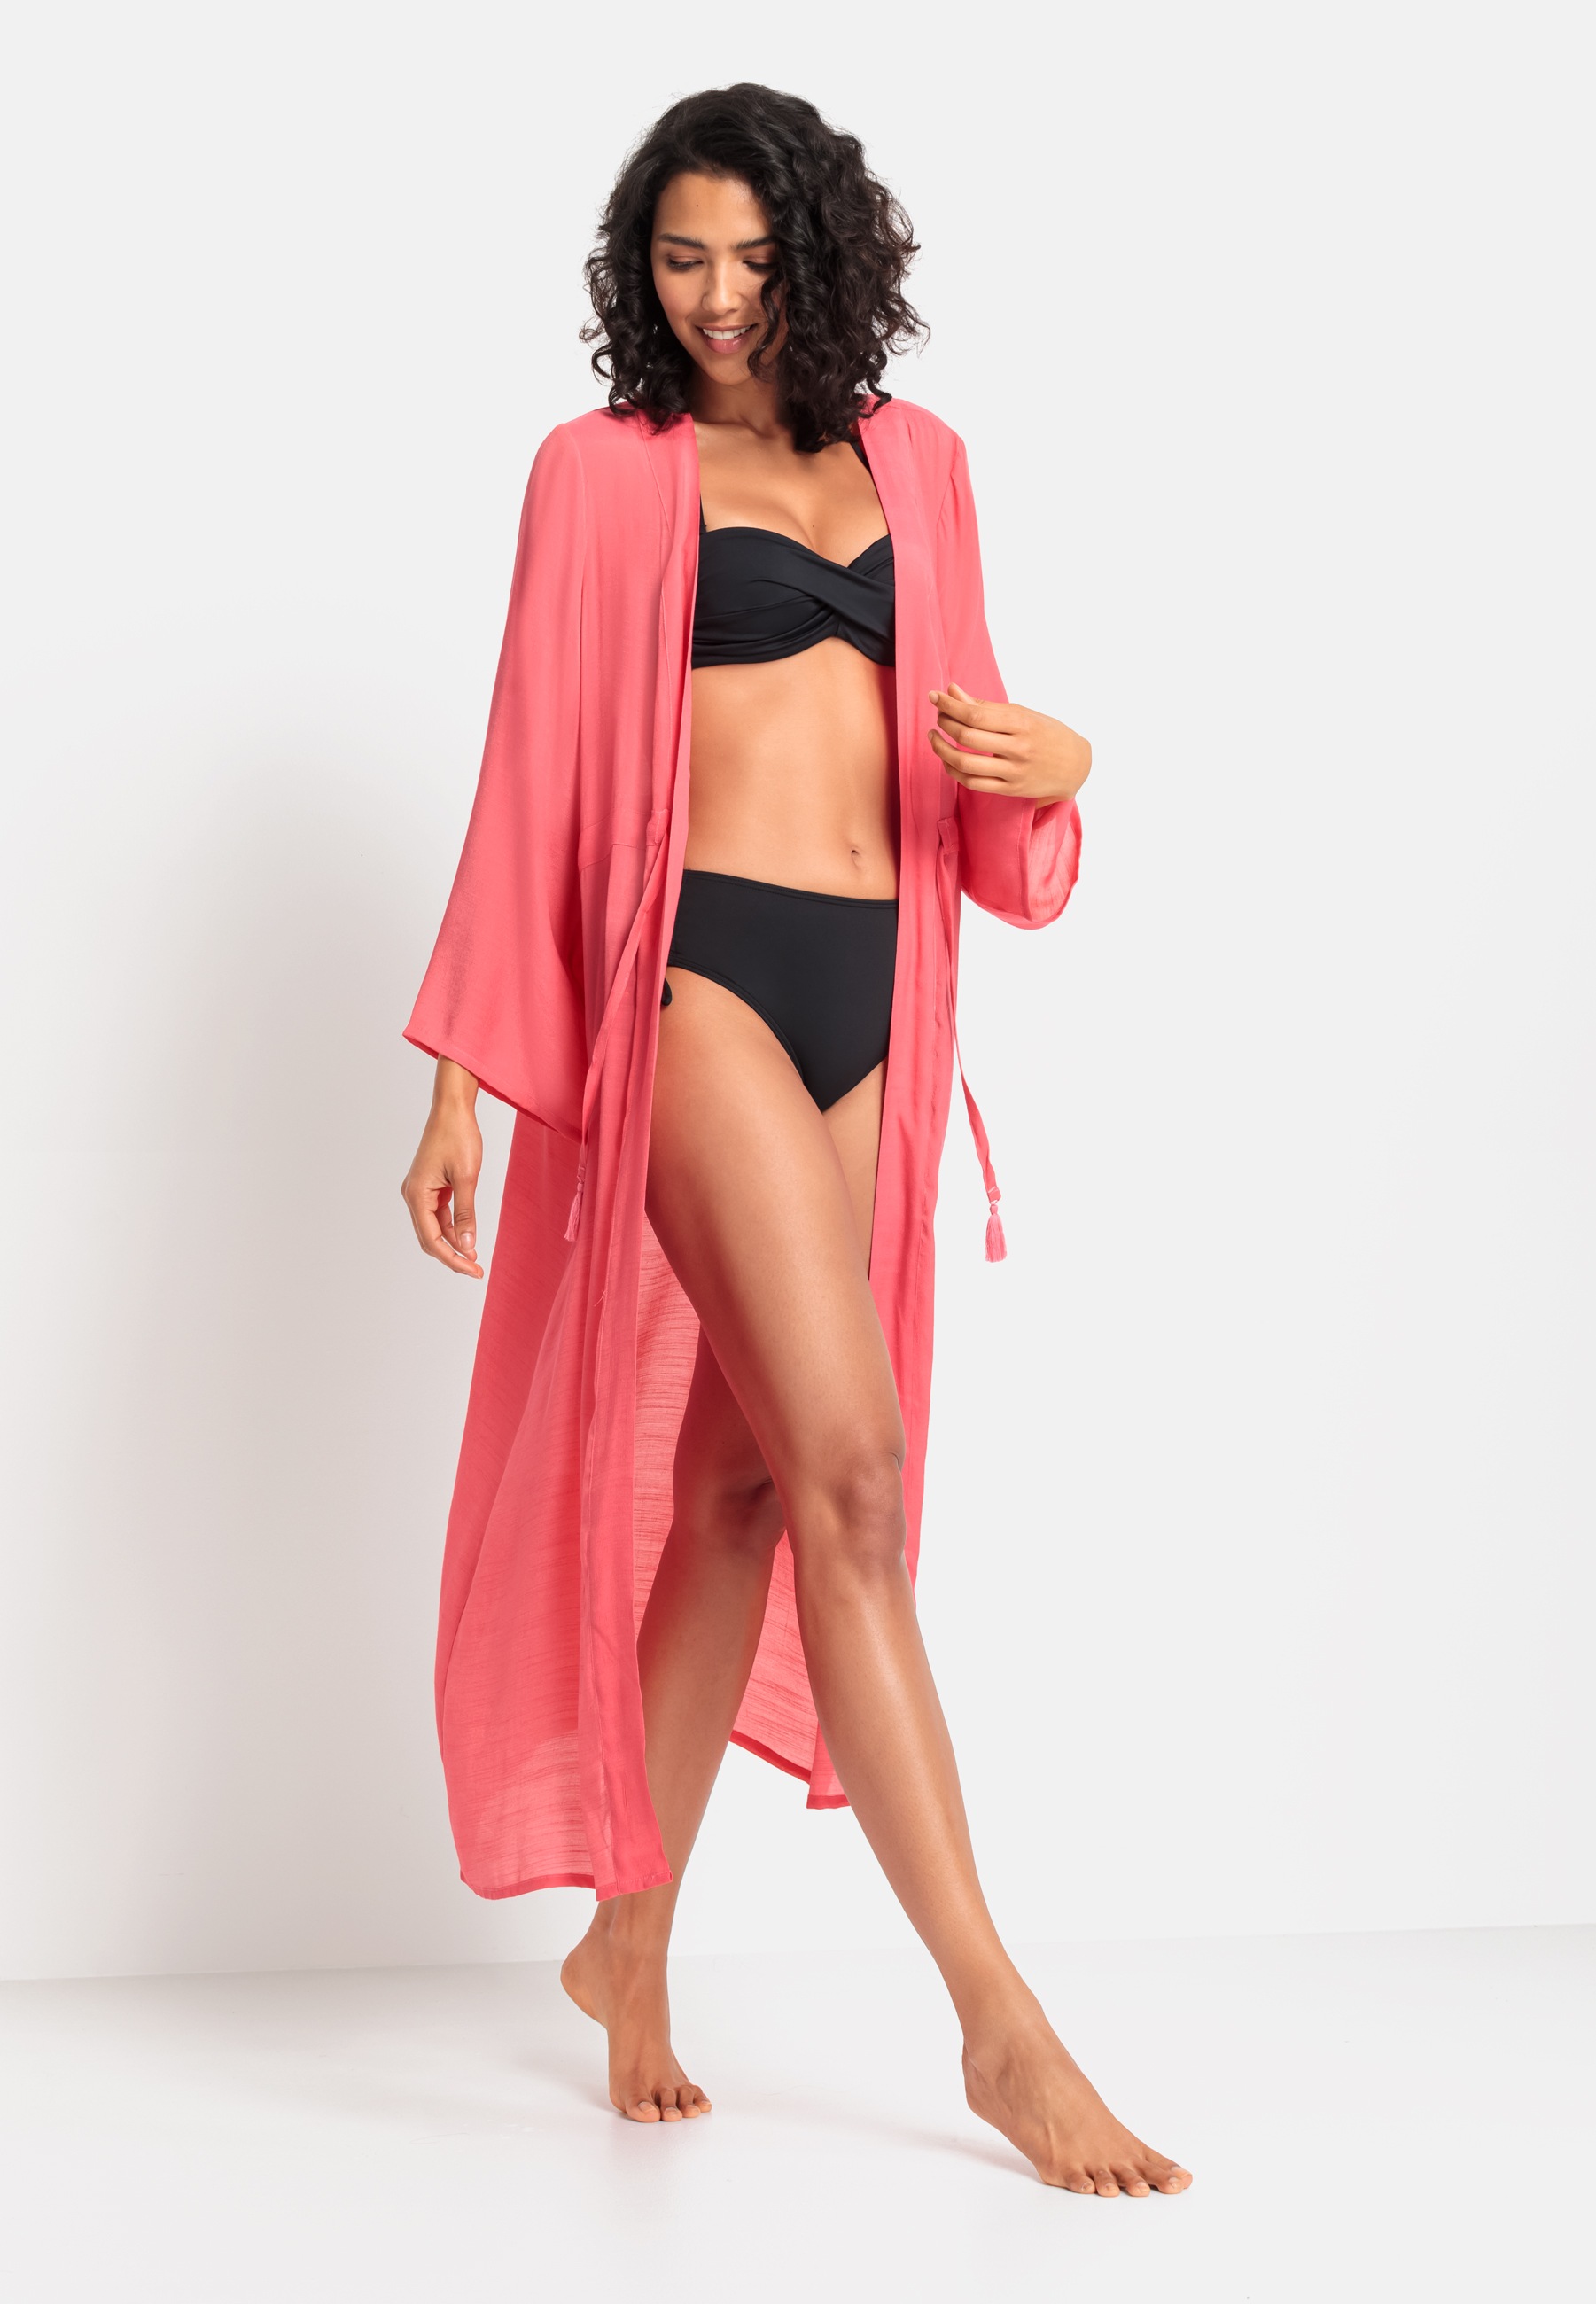 LASCANA Strandkleid, & Lingerie Kimono-Style online Unterwäsche im | LASCANA kaufen Bademode, »